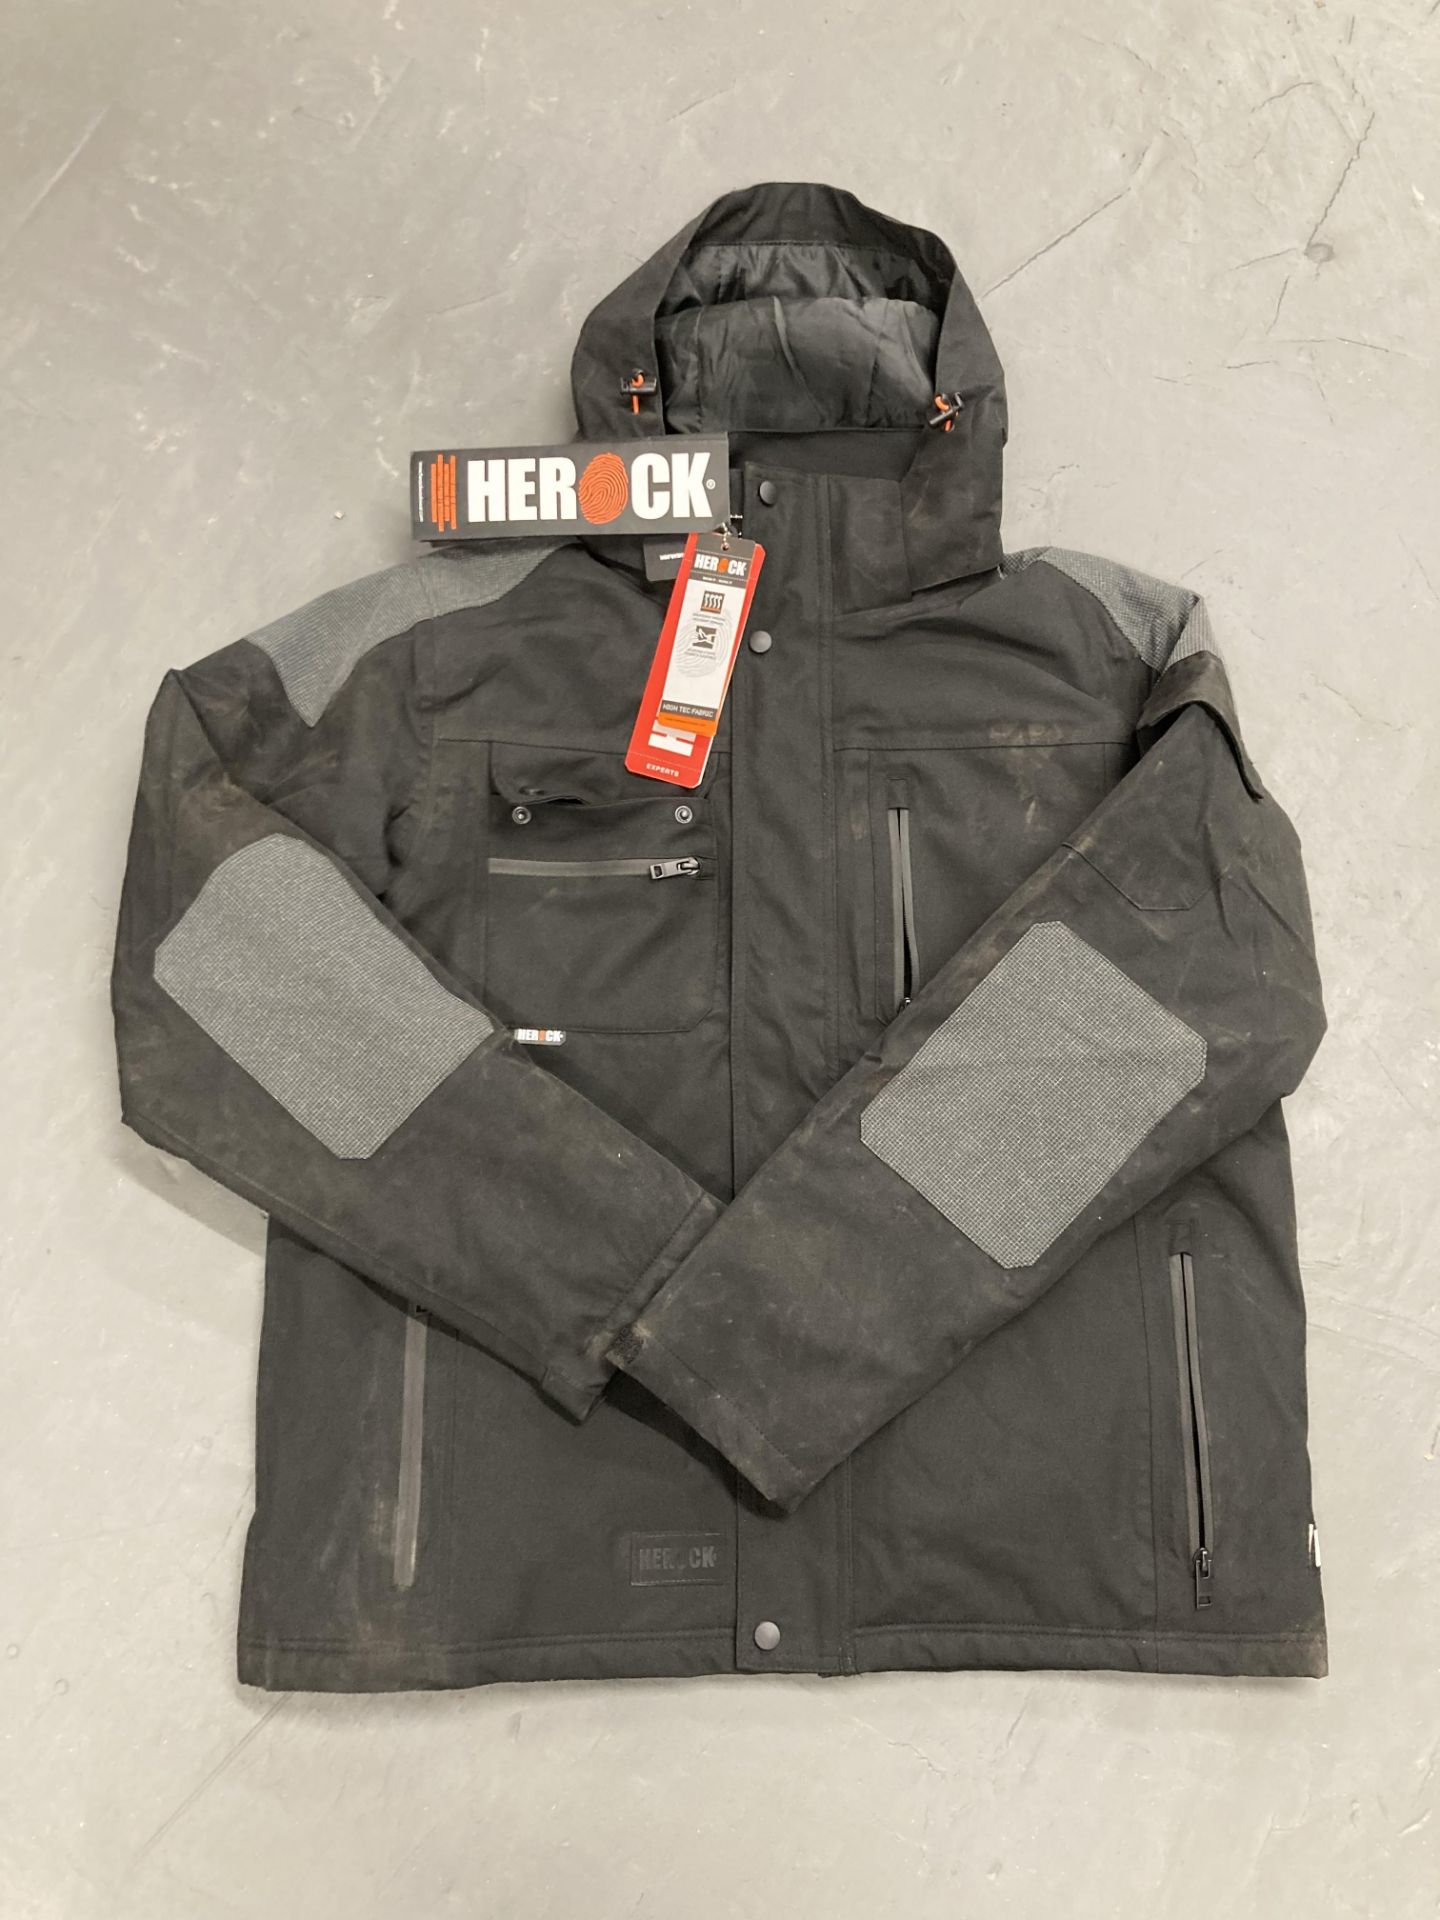 A Herock High Tech extra large work jacket